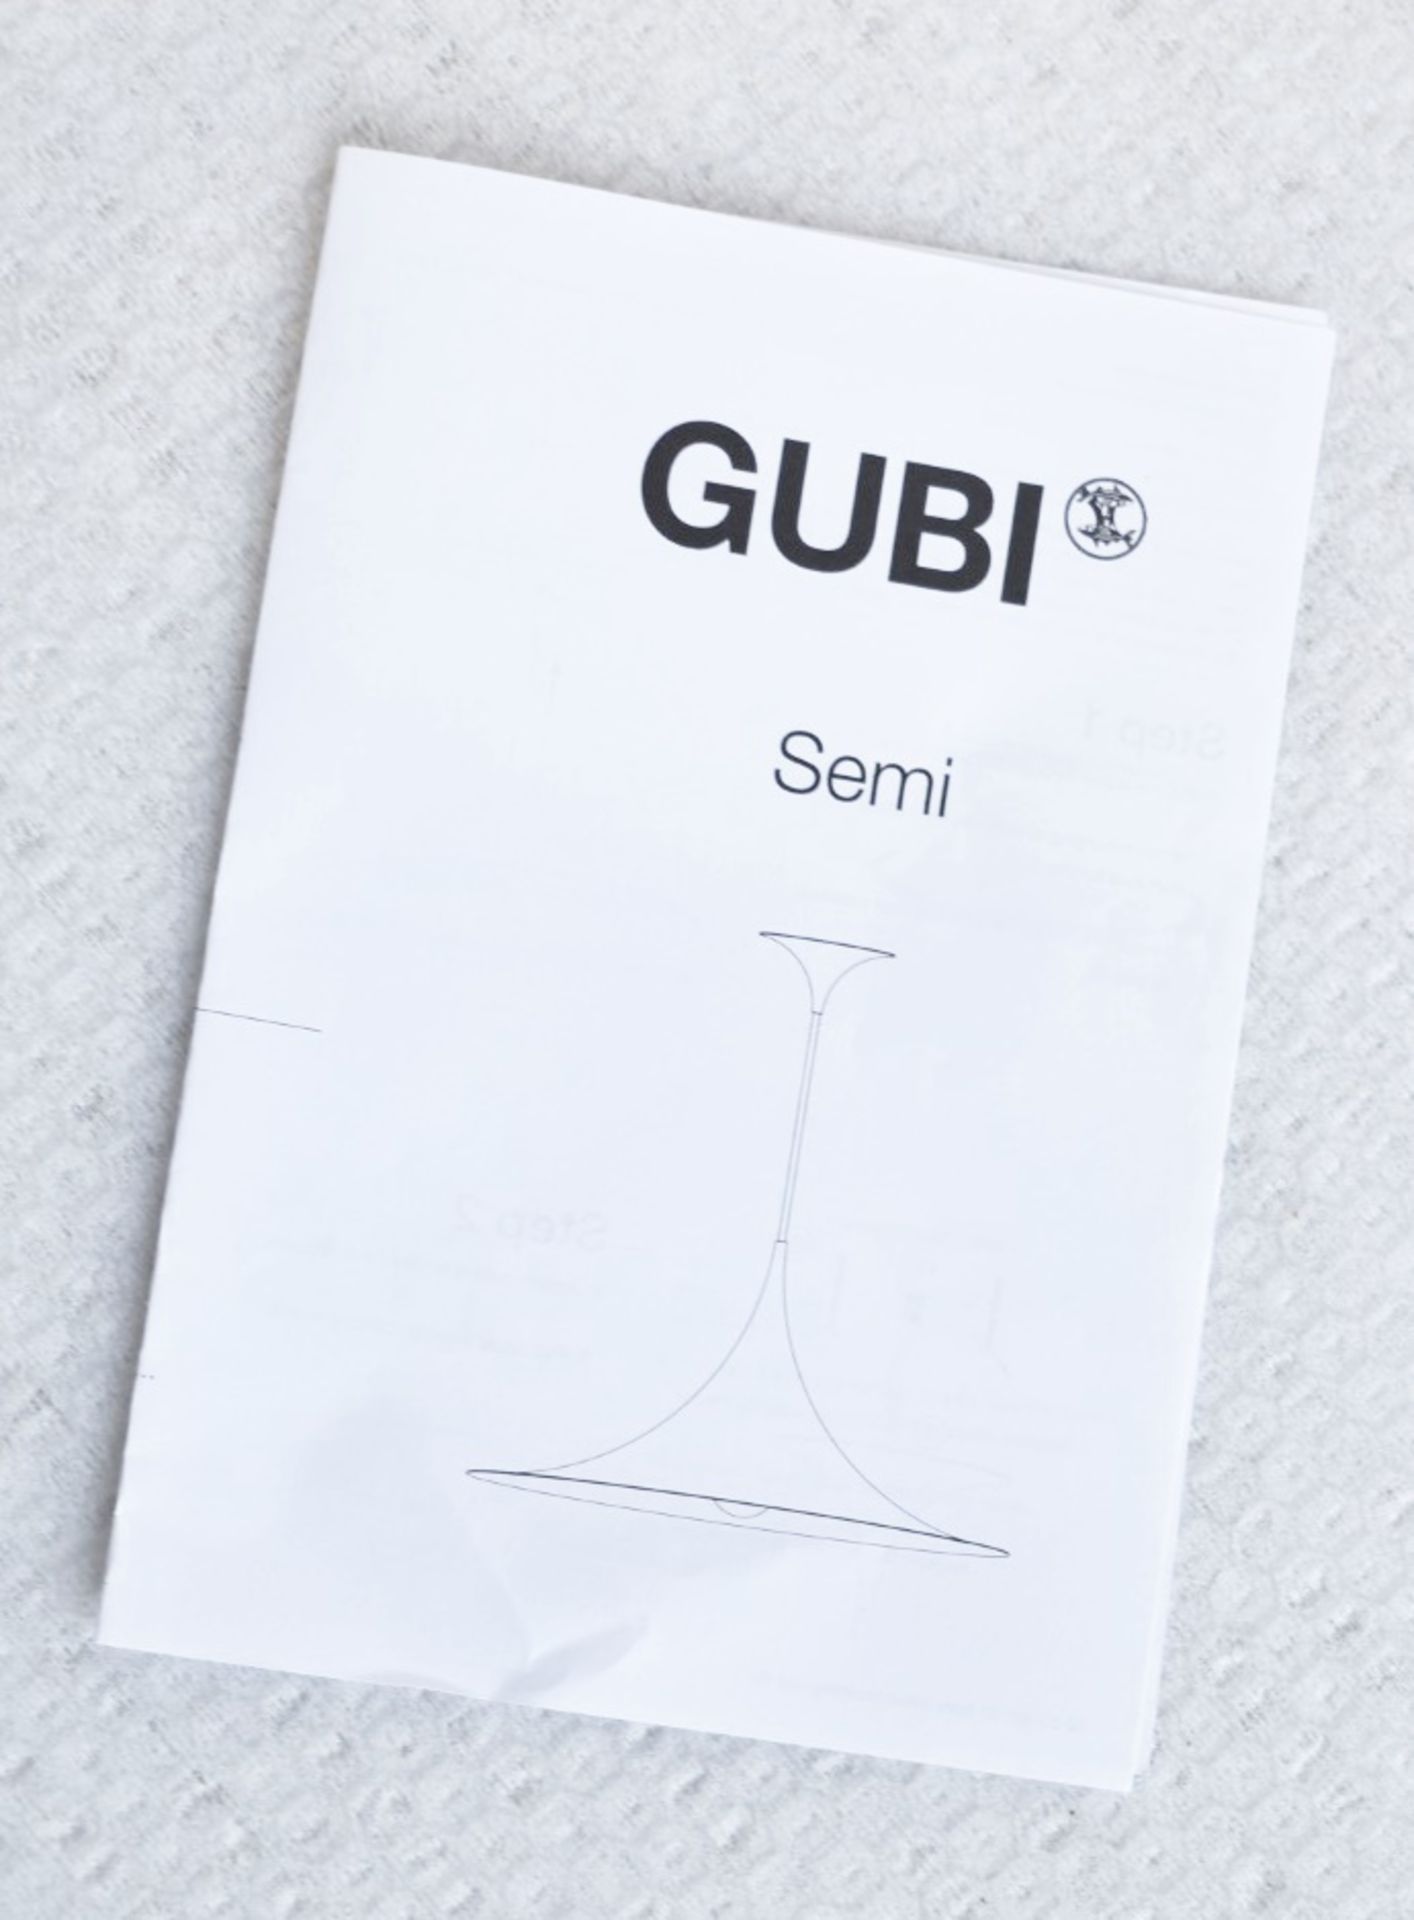 1 x GUBI 'Semi' Designer 60cm Metal Pendant Light Fitting in Polished Brass - Original Price £540.00 - Image 11 of 12